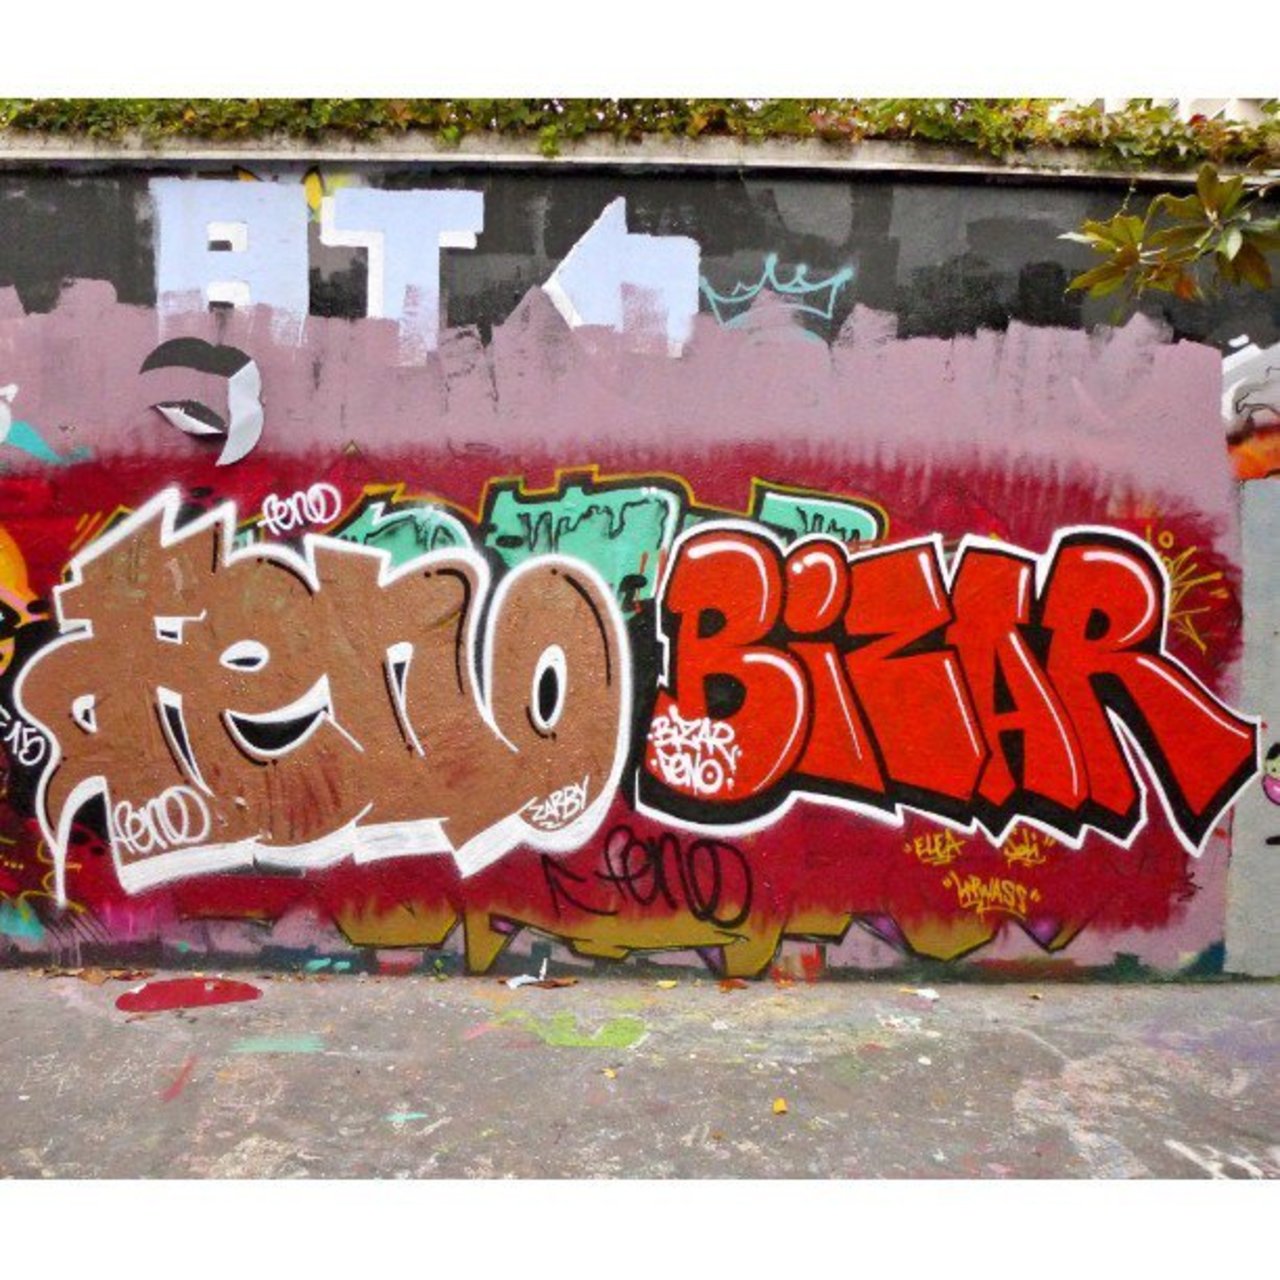 FENO & BIZAR
#streetart #graffiti #graff #art #fatcap #bombing #sprayart #spraycanart #wallart #handstyle #letterin… https://t.co/a6XHhAg1Ob